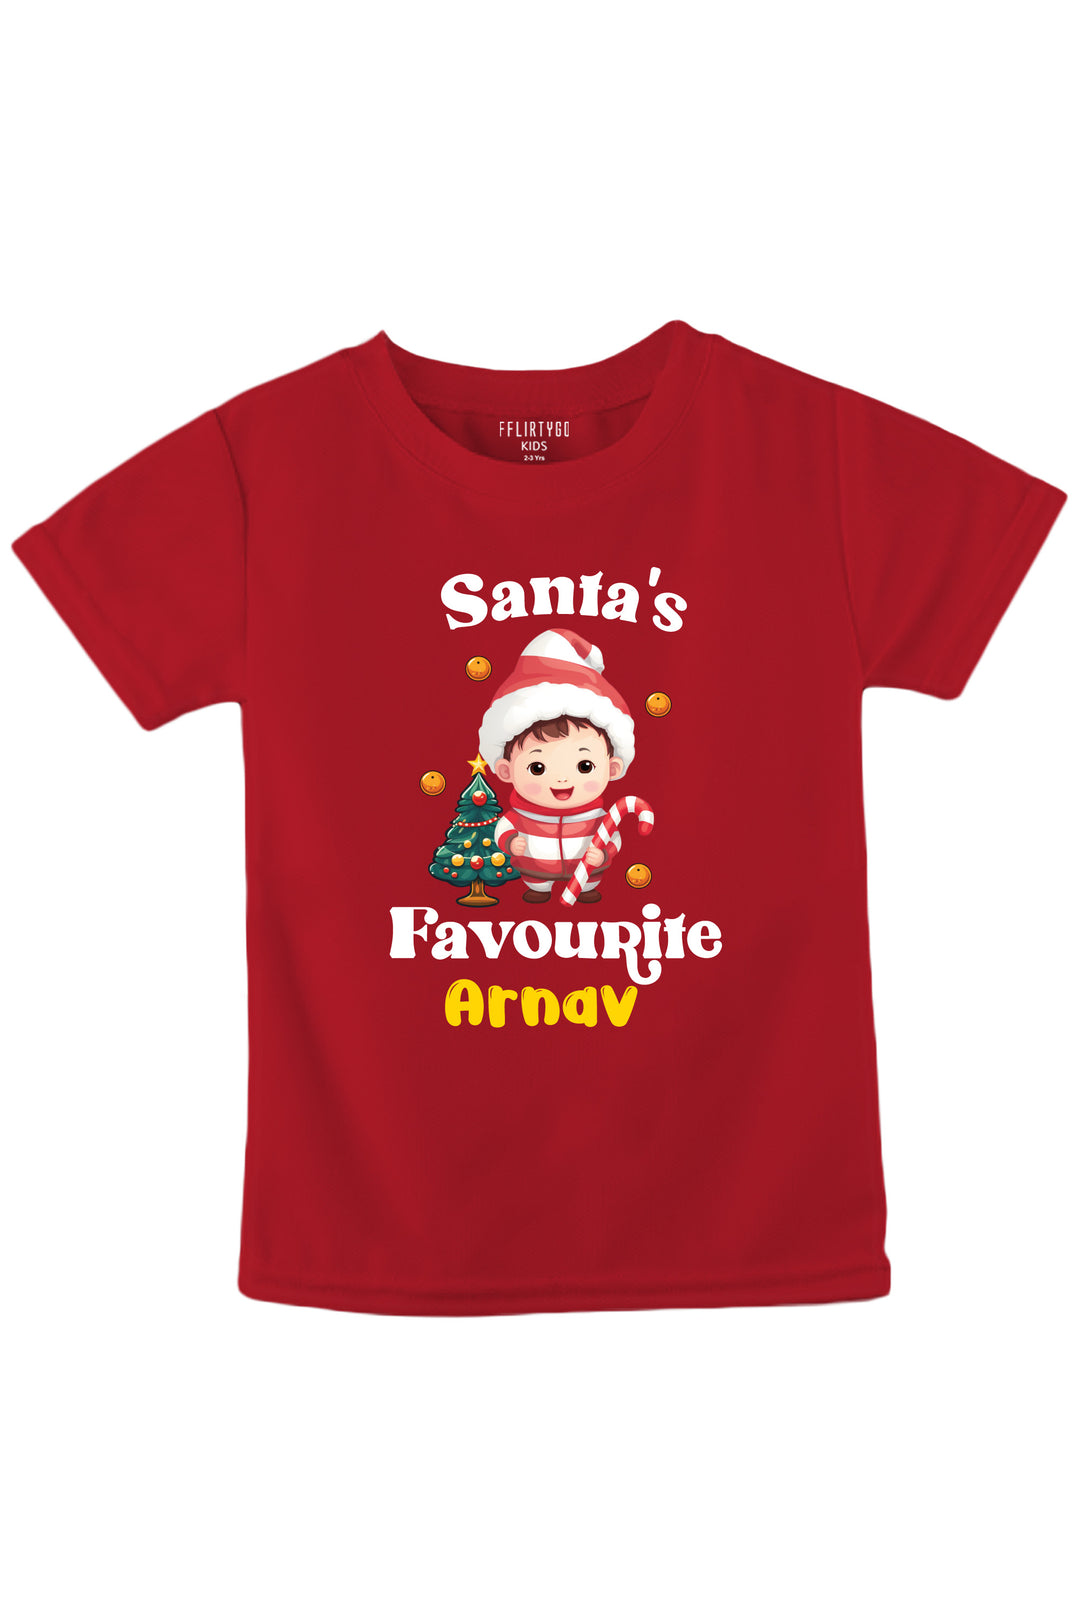 Santa's Favourite Kids T Shirt w/ Custom Name